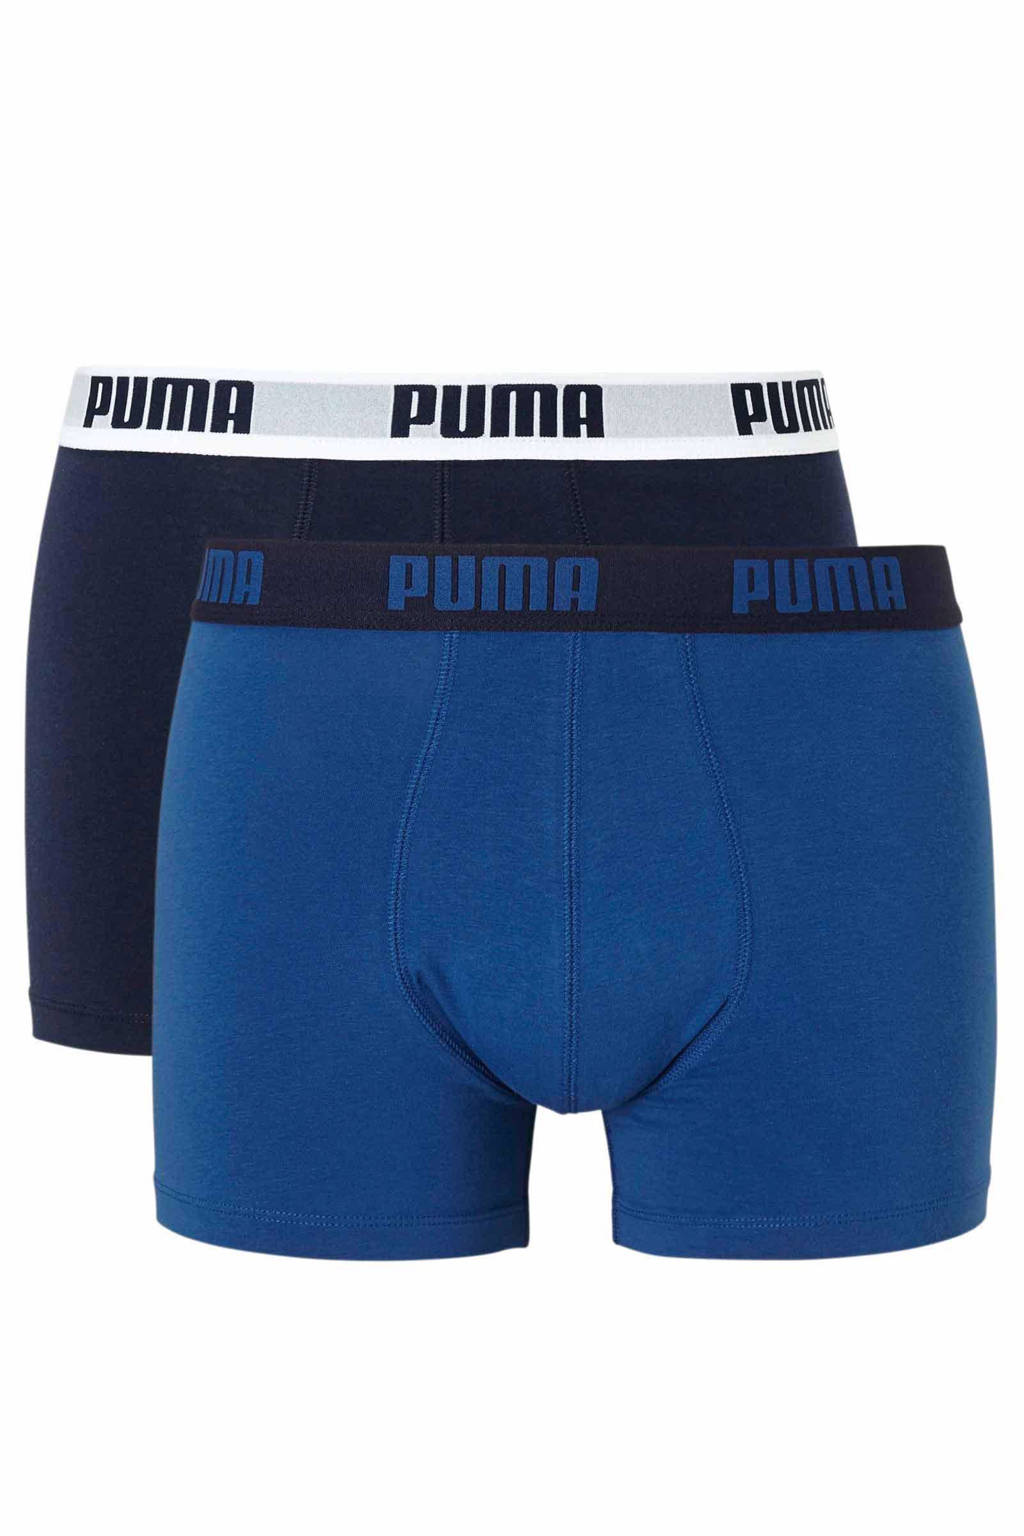 Puma boxershort (set van 2), Blauw/wit